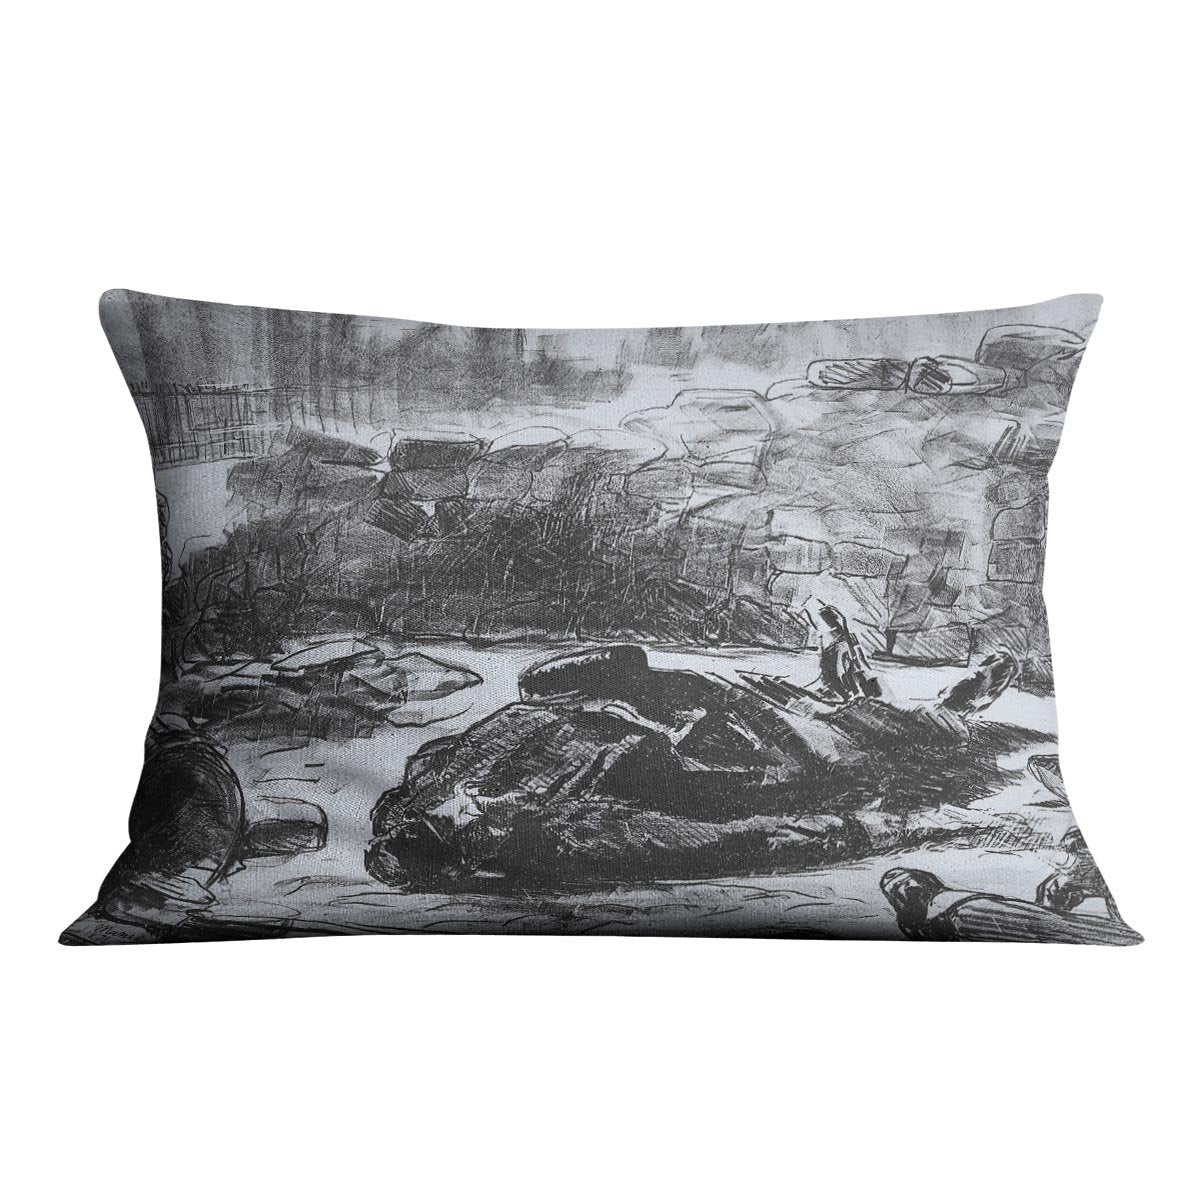 Civil war by Manet Throw Pillow